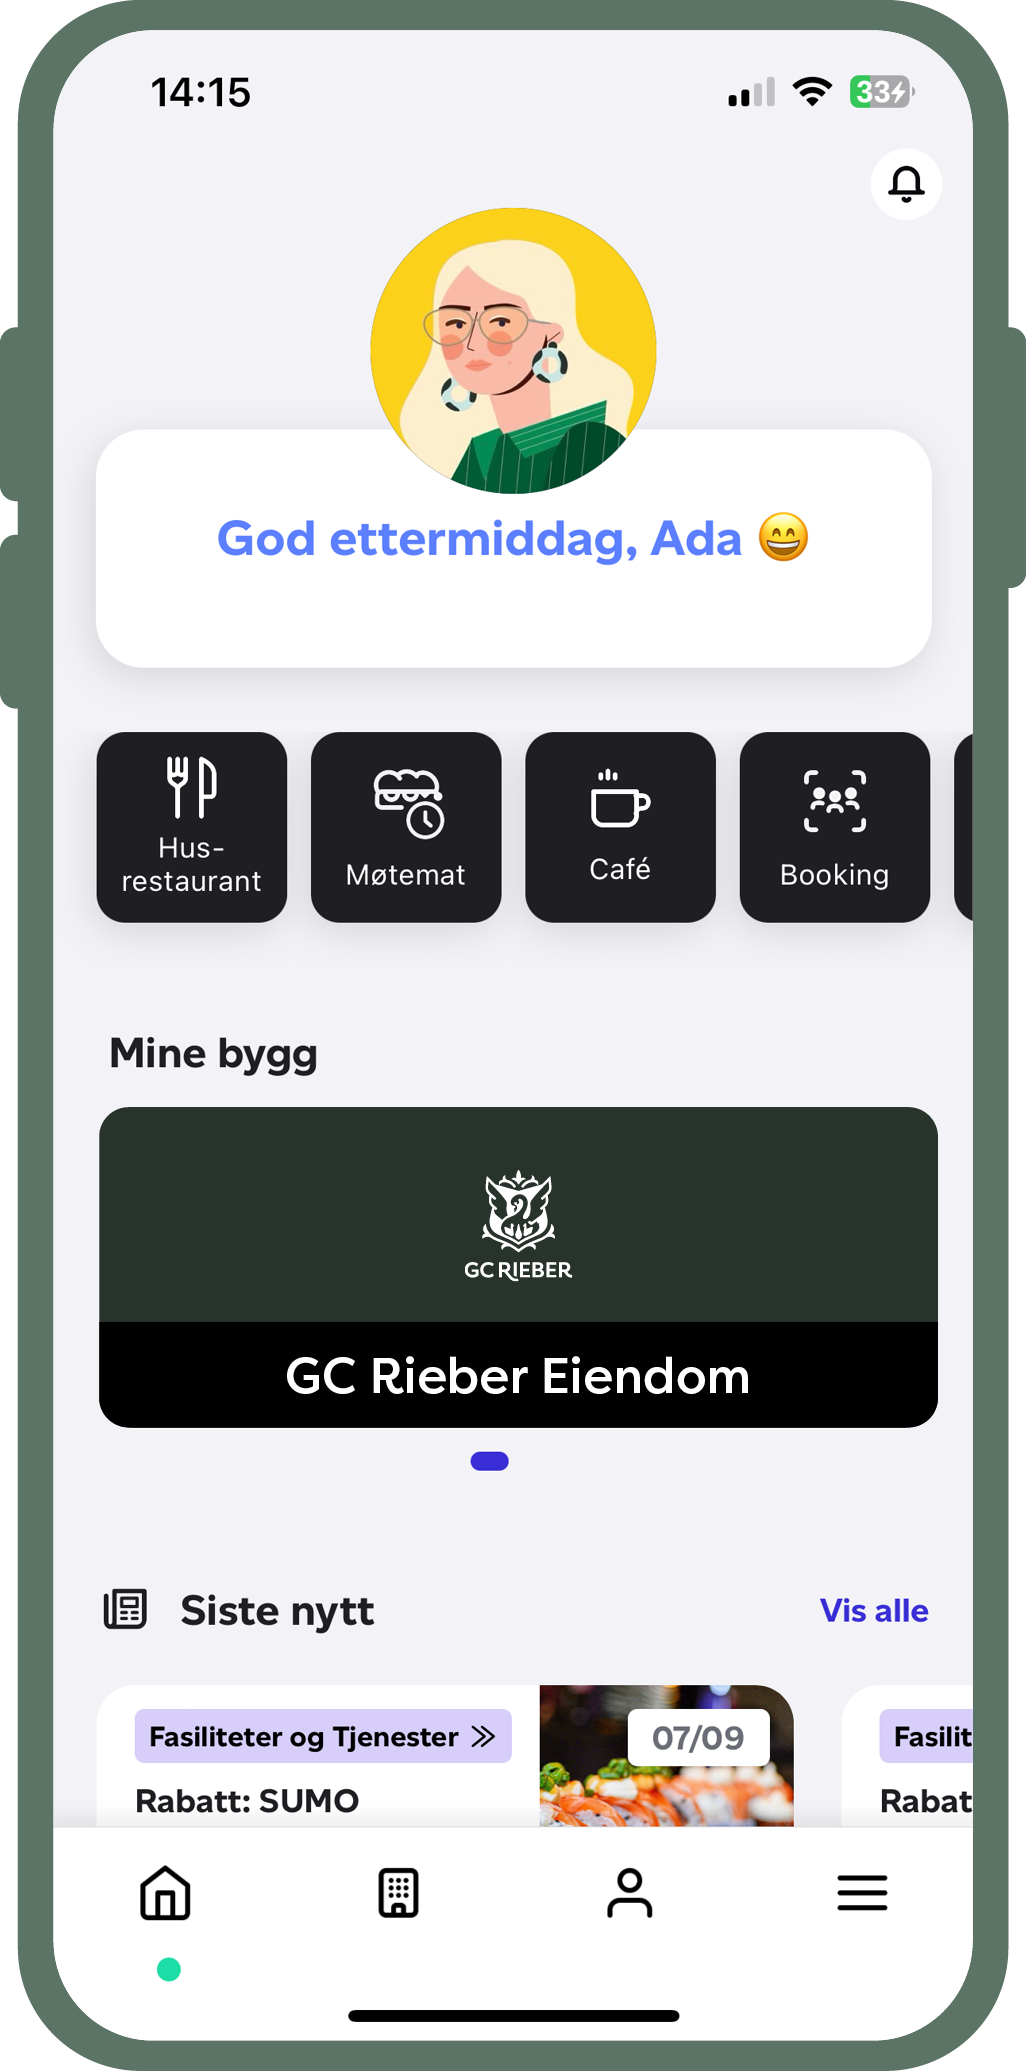 Mockup av mobil med IZY app på skjerm